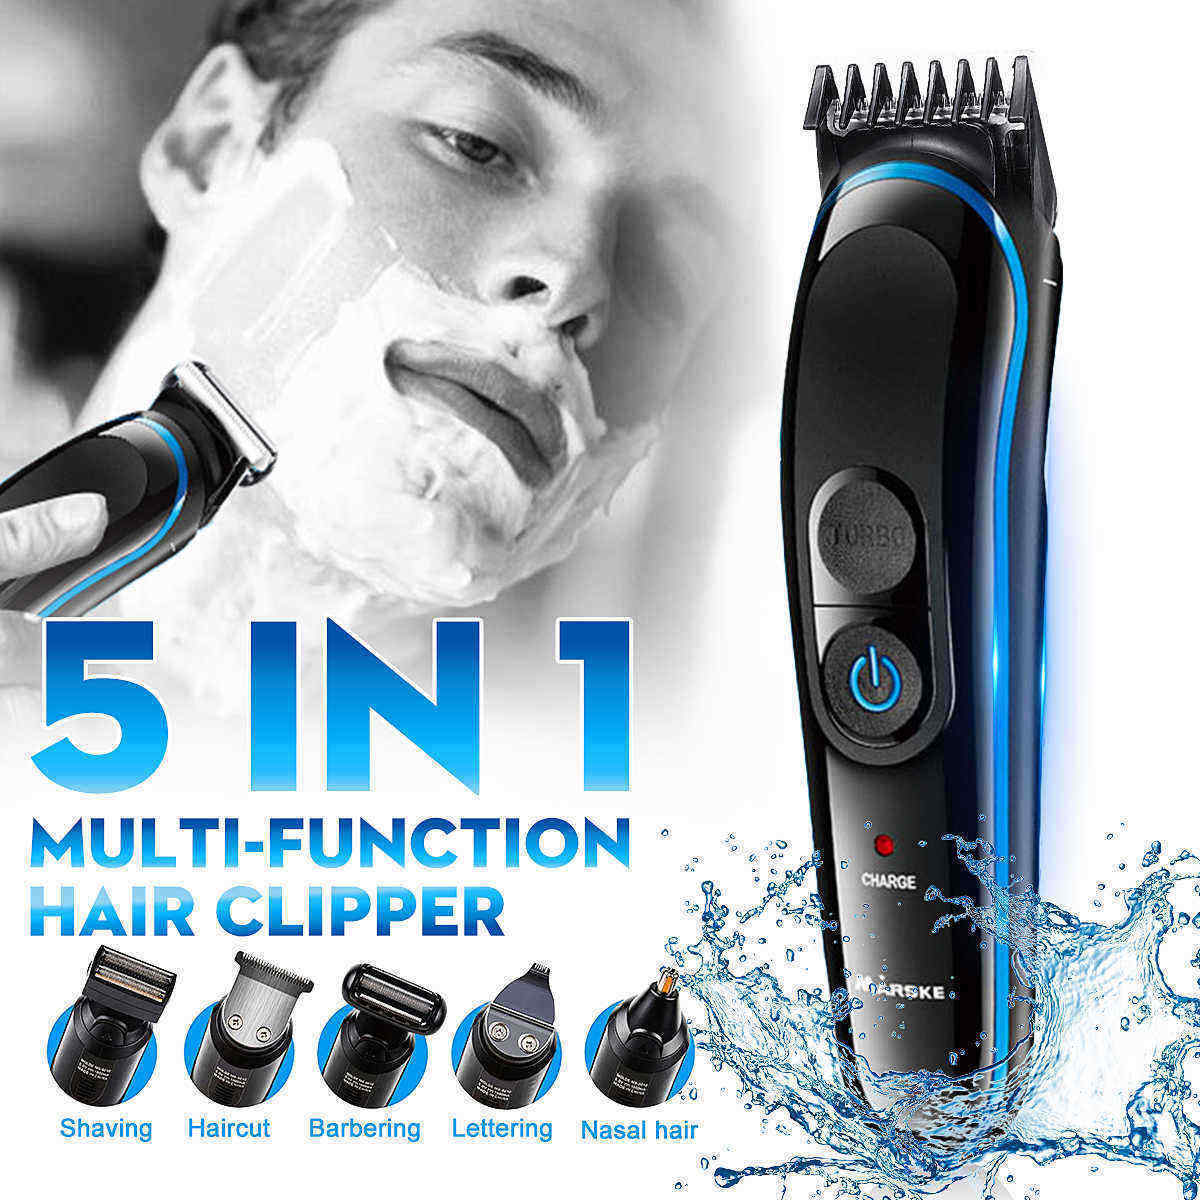 100-240V-Hair-Clipper-USB-Cutting-Trimmer-Fast-Charging-Electric-Beard-Trimmer-Barber-Razor-1465235